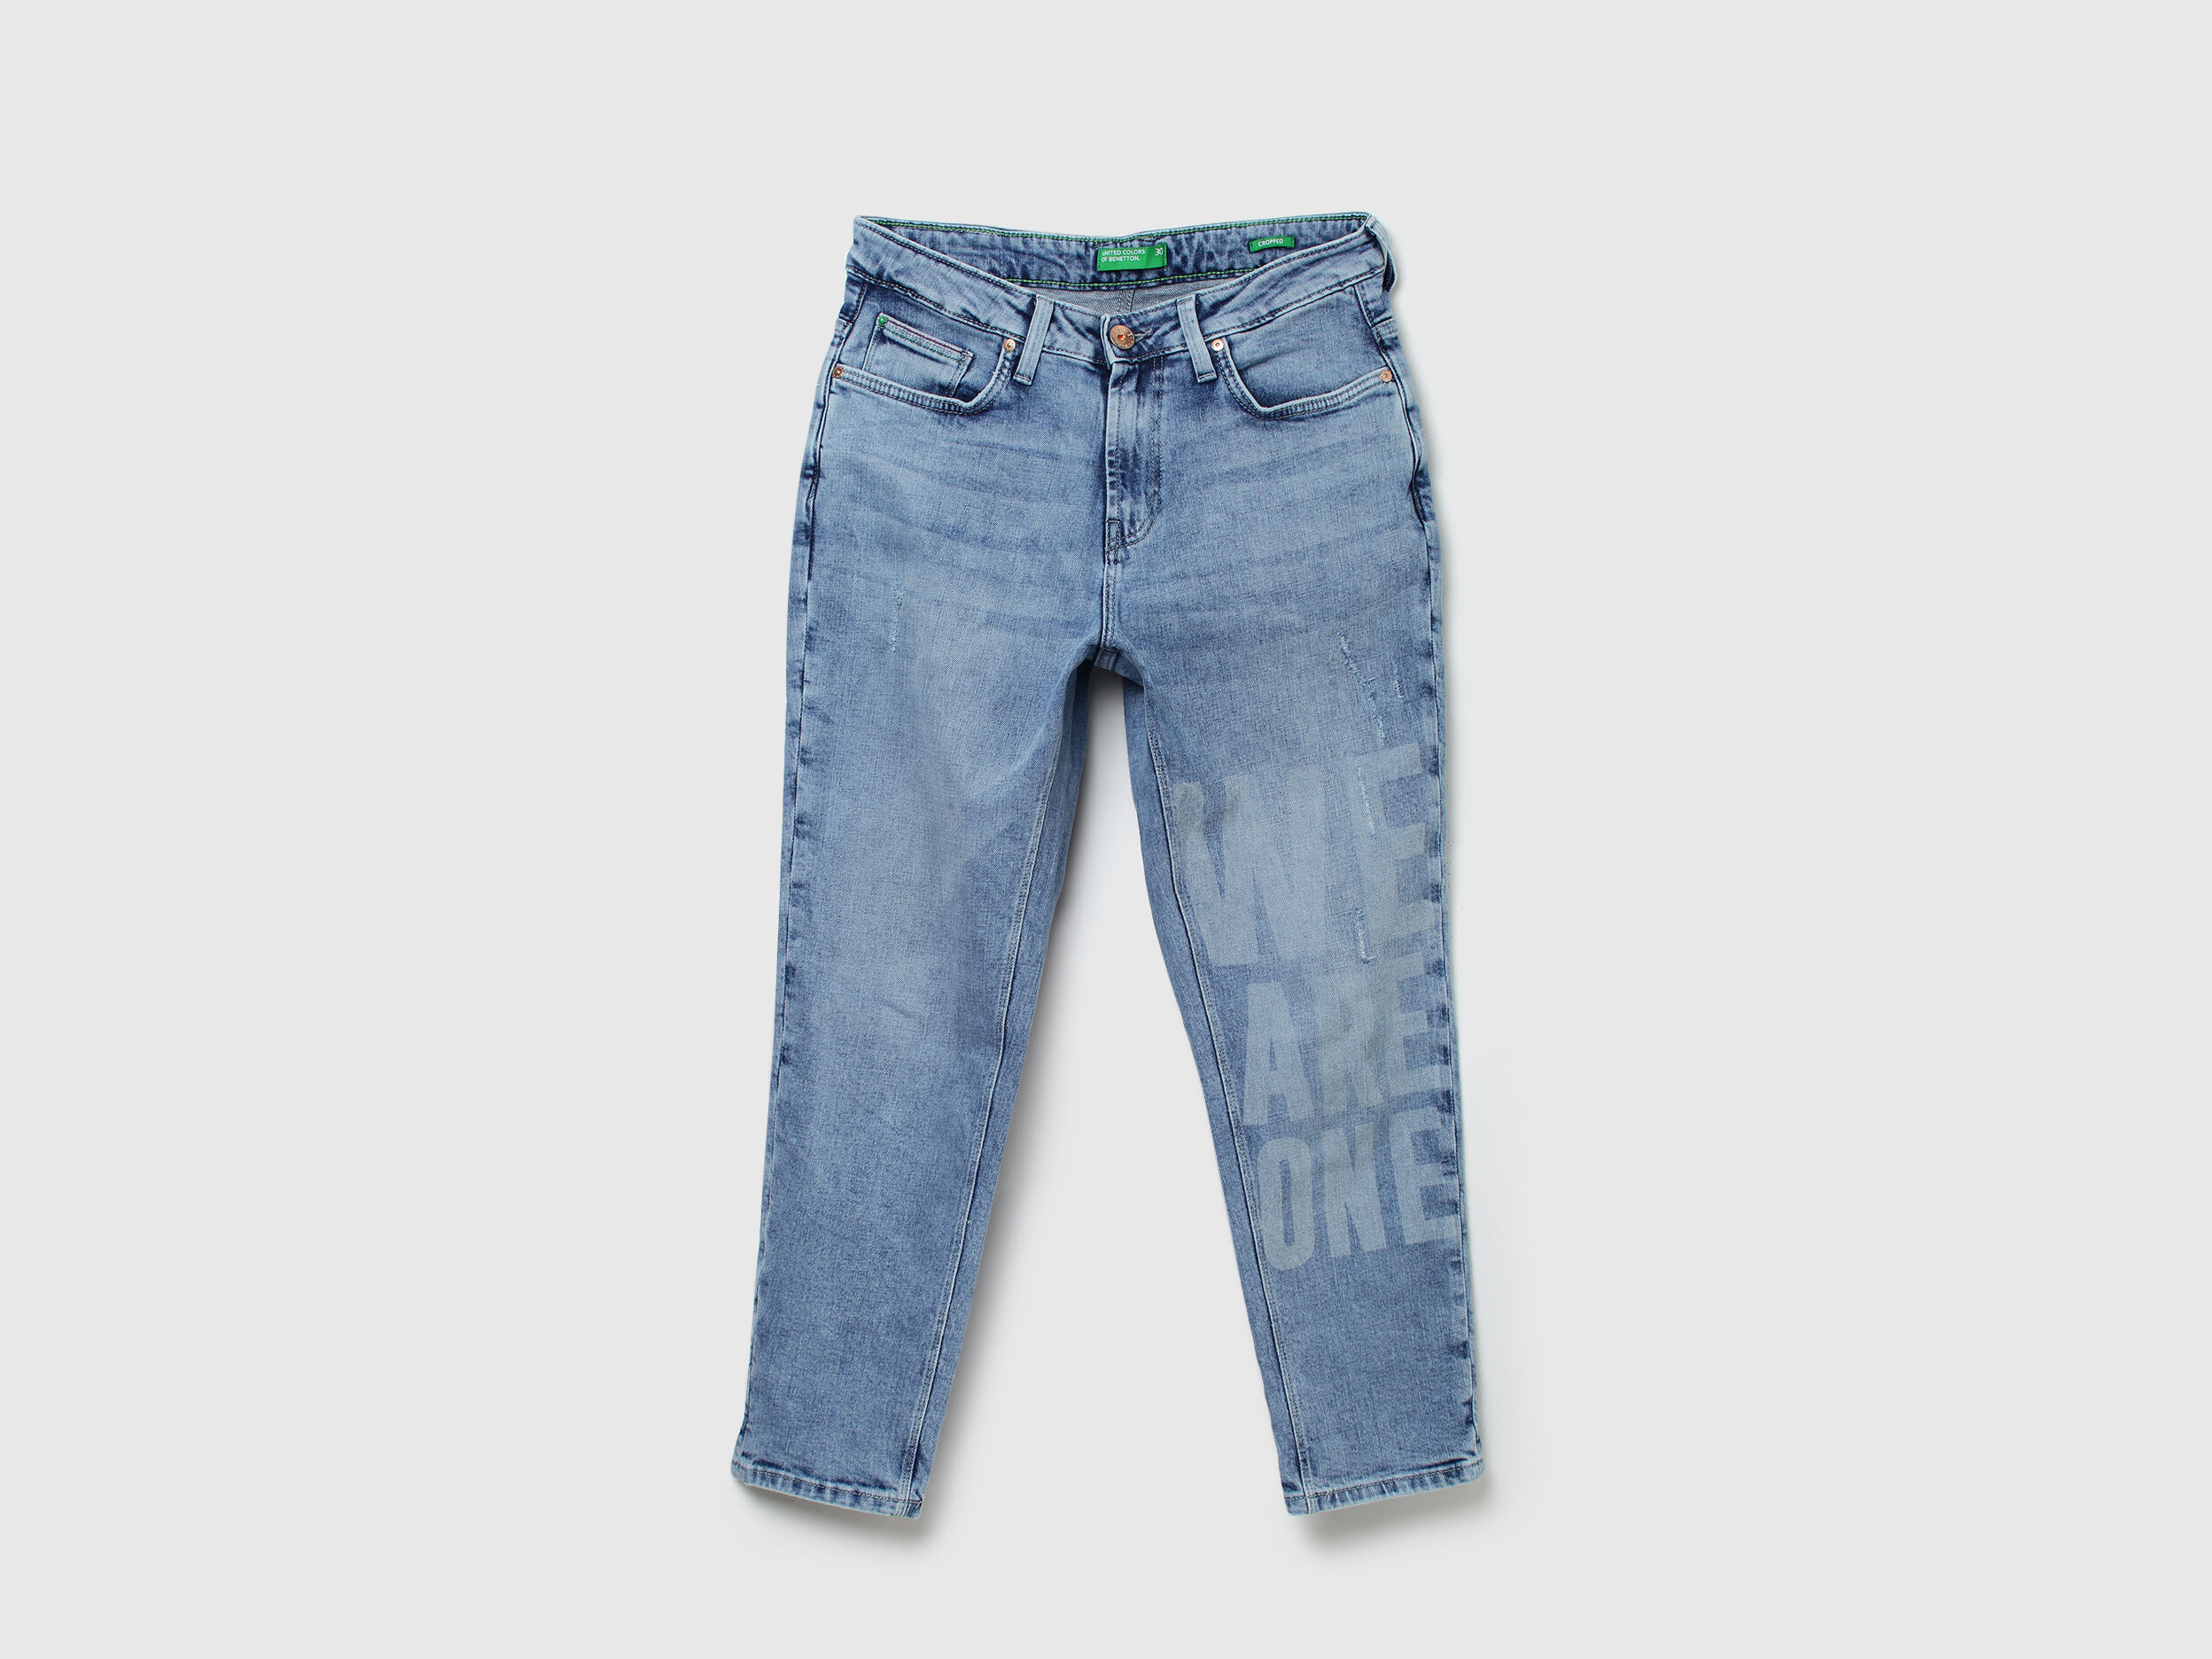 Kids Girls Jeans Wide-Leg Trousers Star Printed Denim Pants Casual Fashion  | eBay